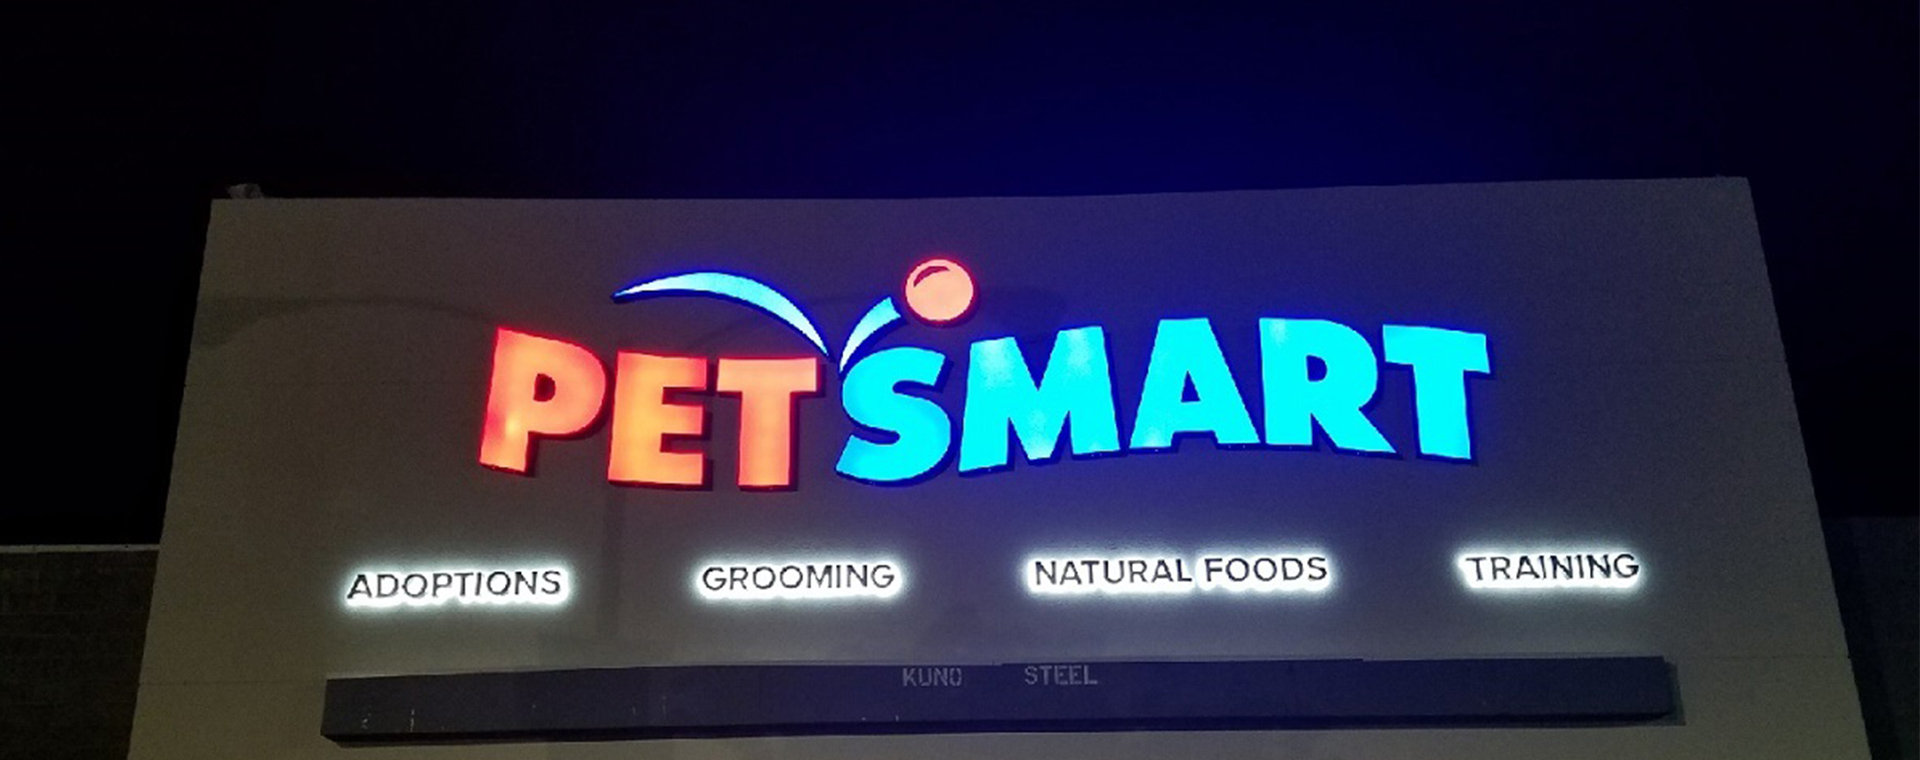 Pet Smart Channel Letter Sign